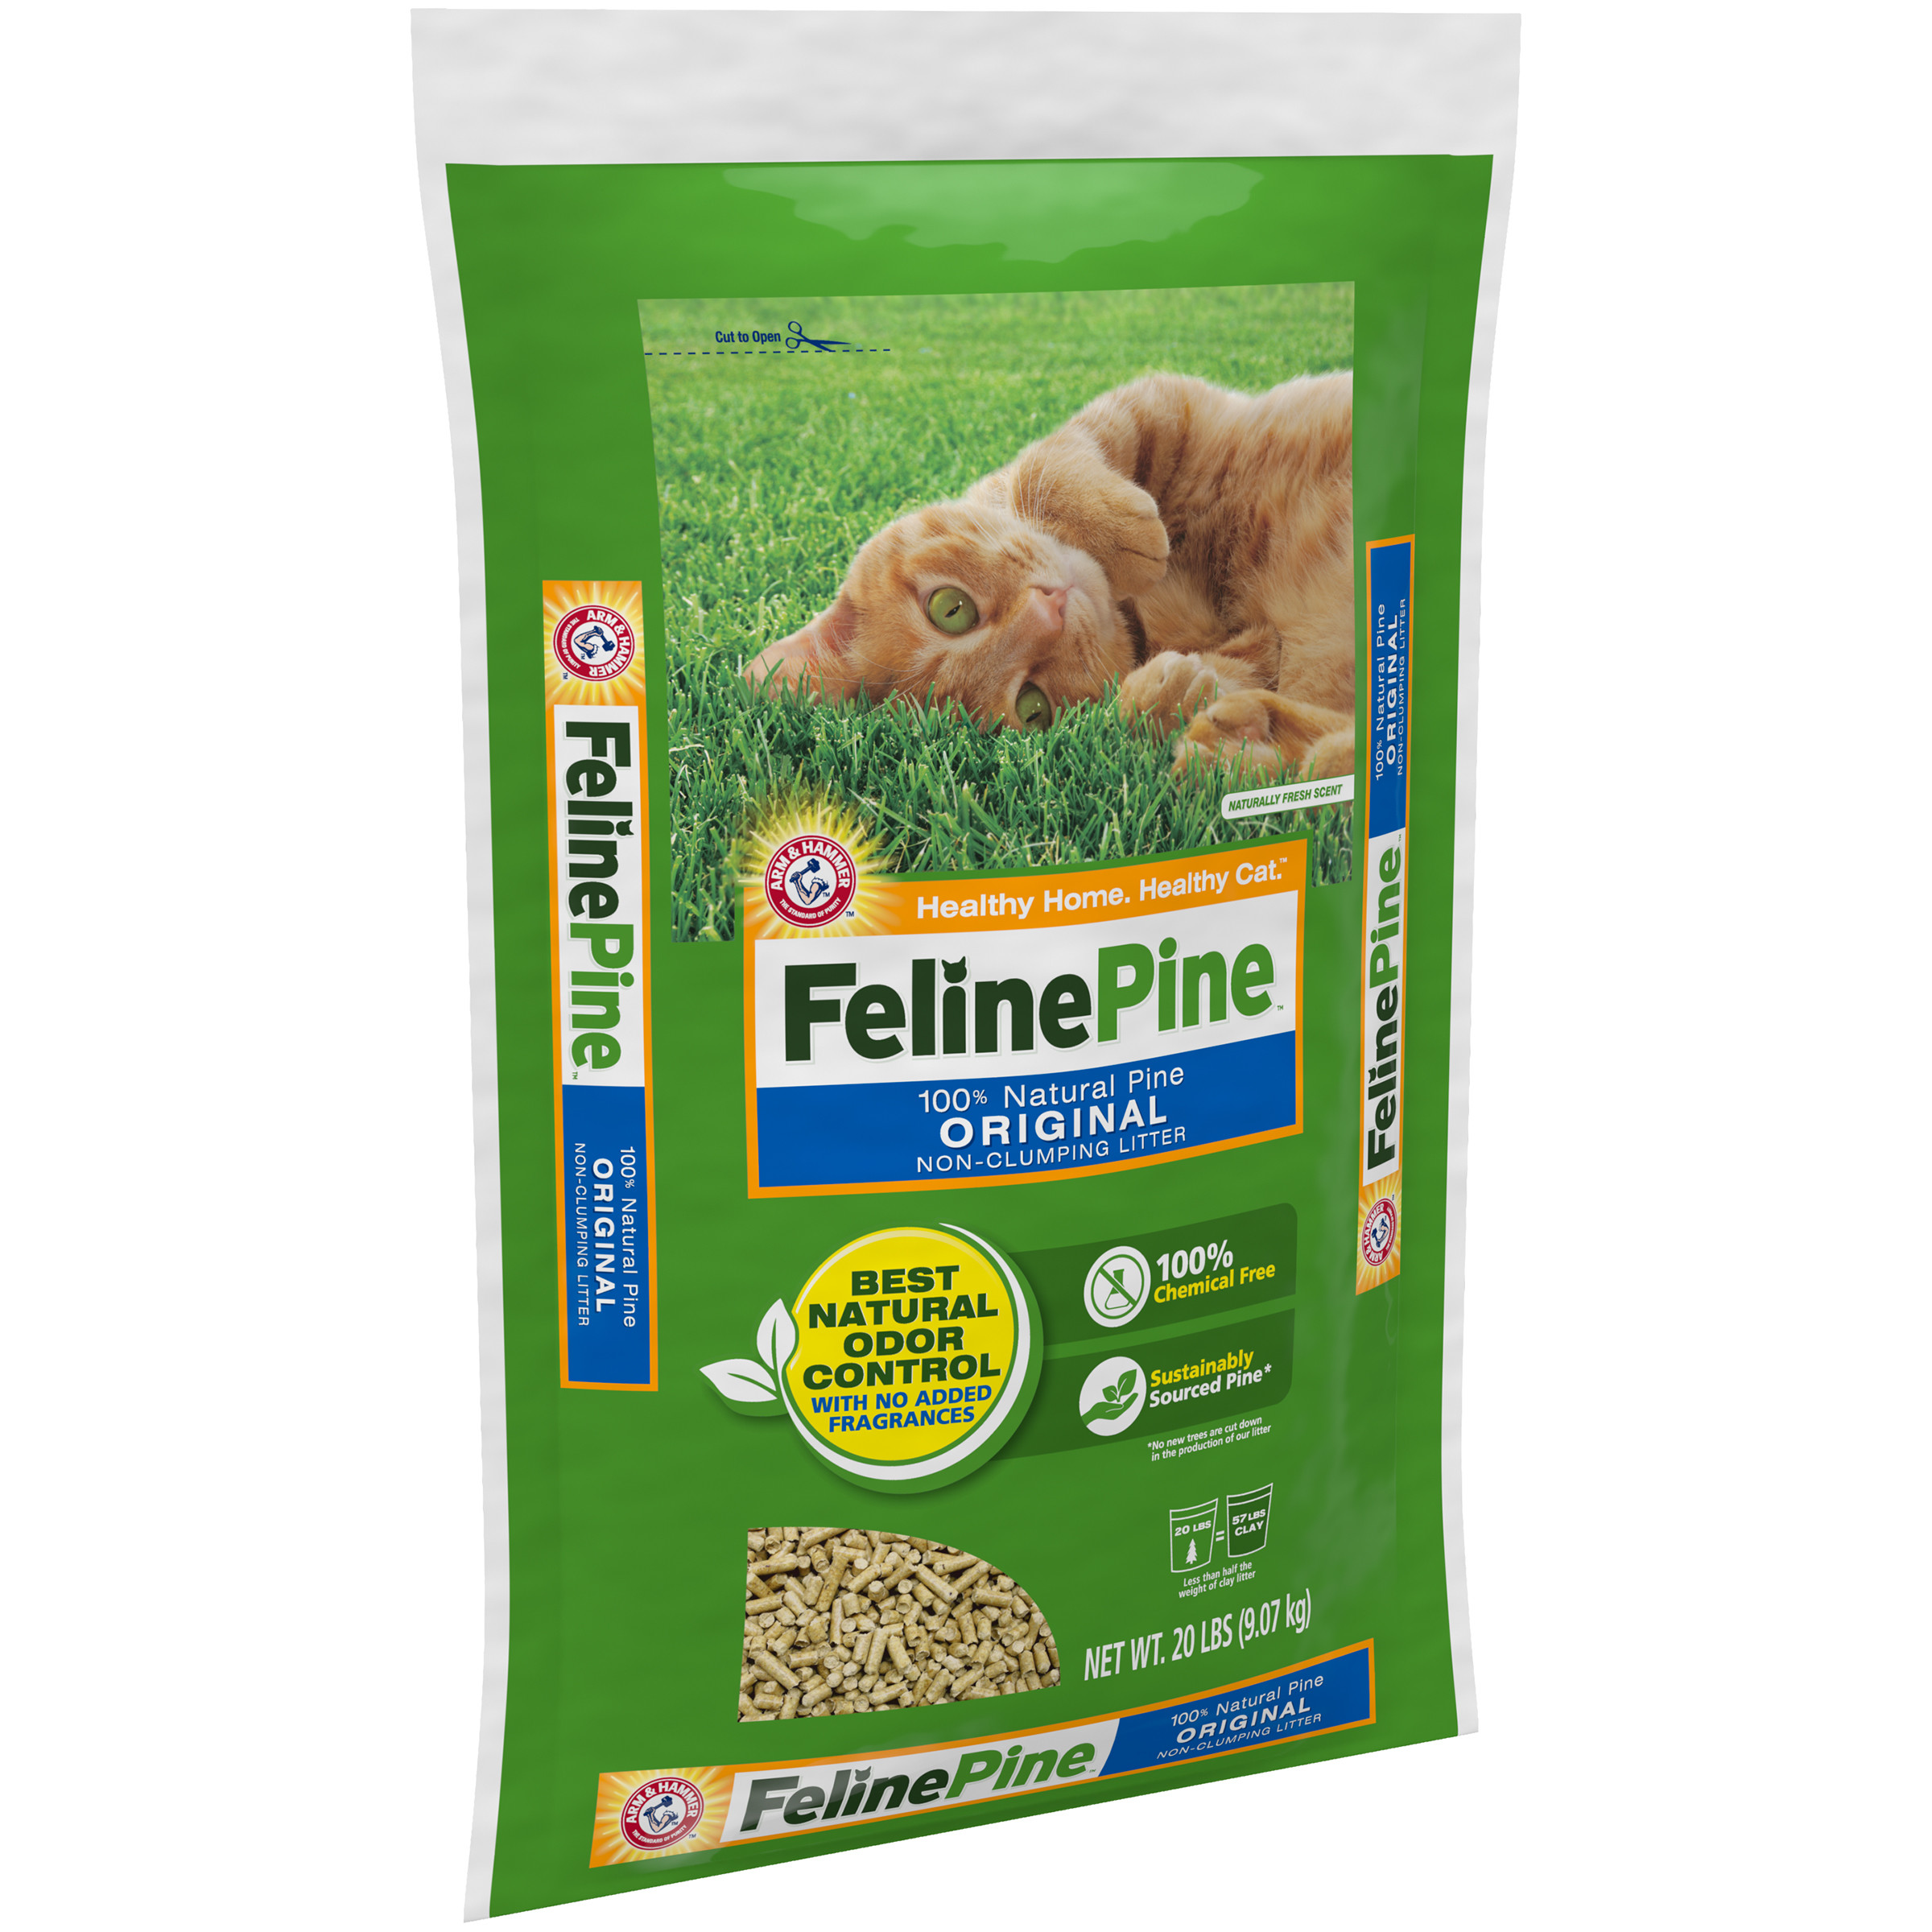 Feline Pine Original 100% Natural Cat Litter, 20 lb - image 3 of 8